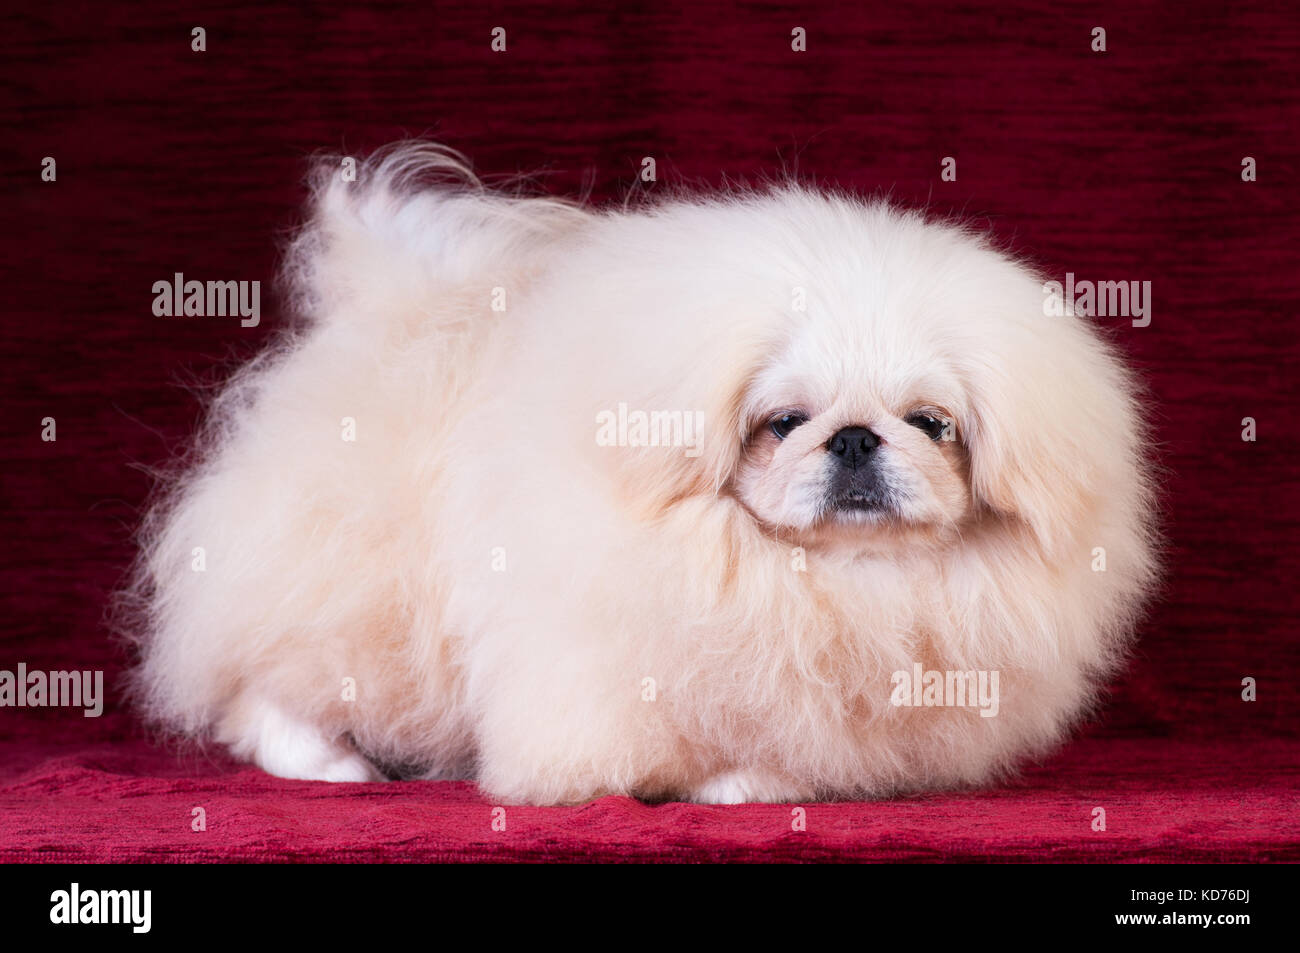 White pekingese puppy portrait at studio on red velvet background Stock Photo